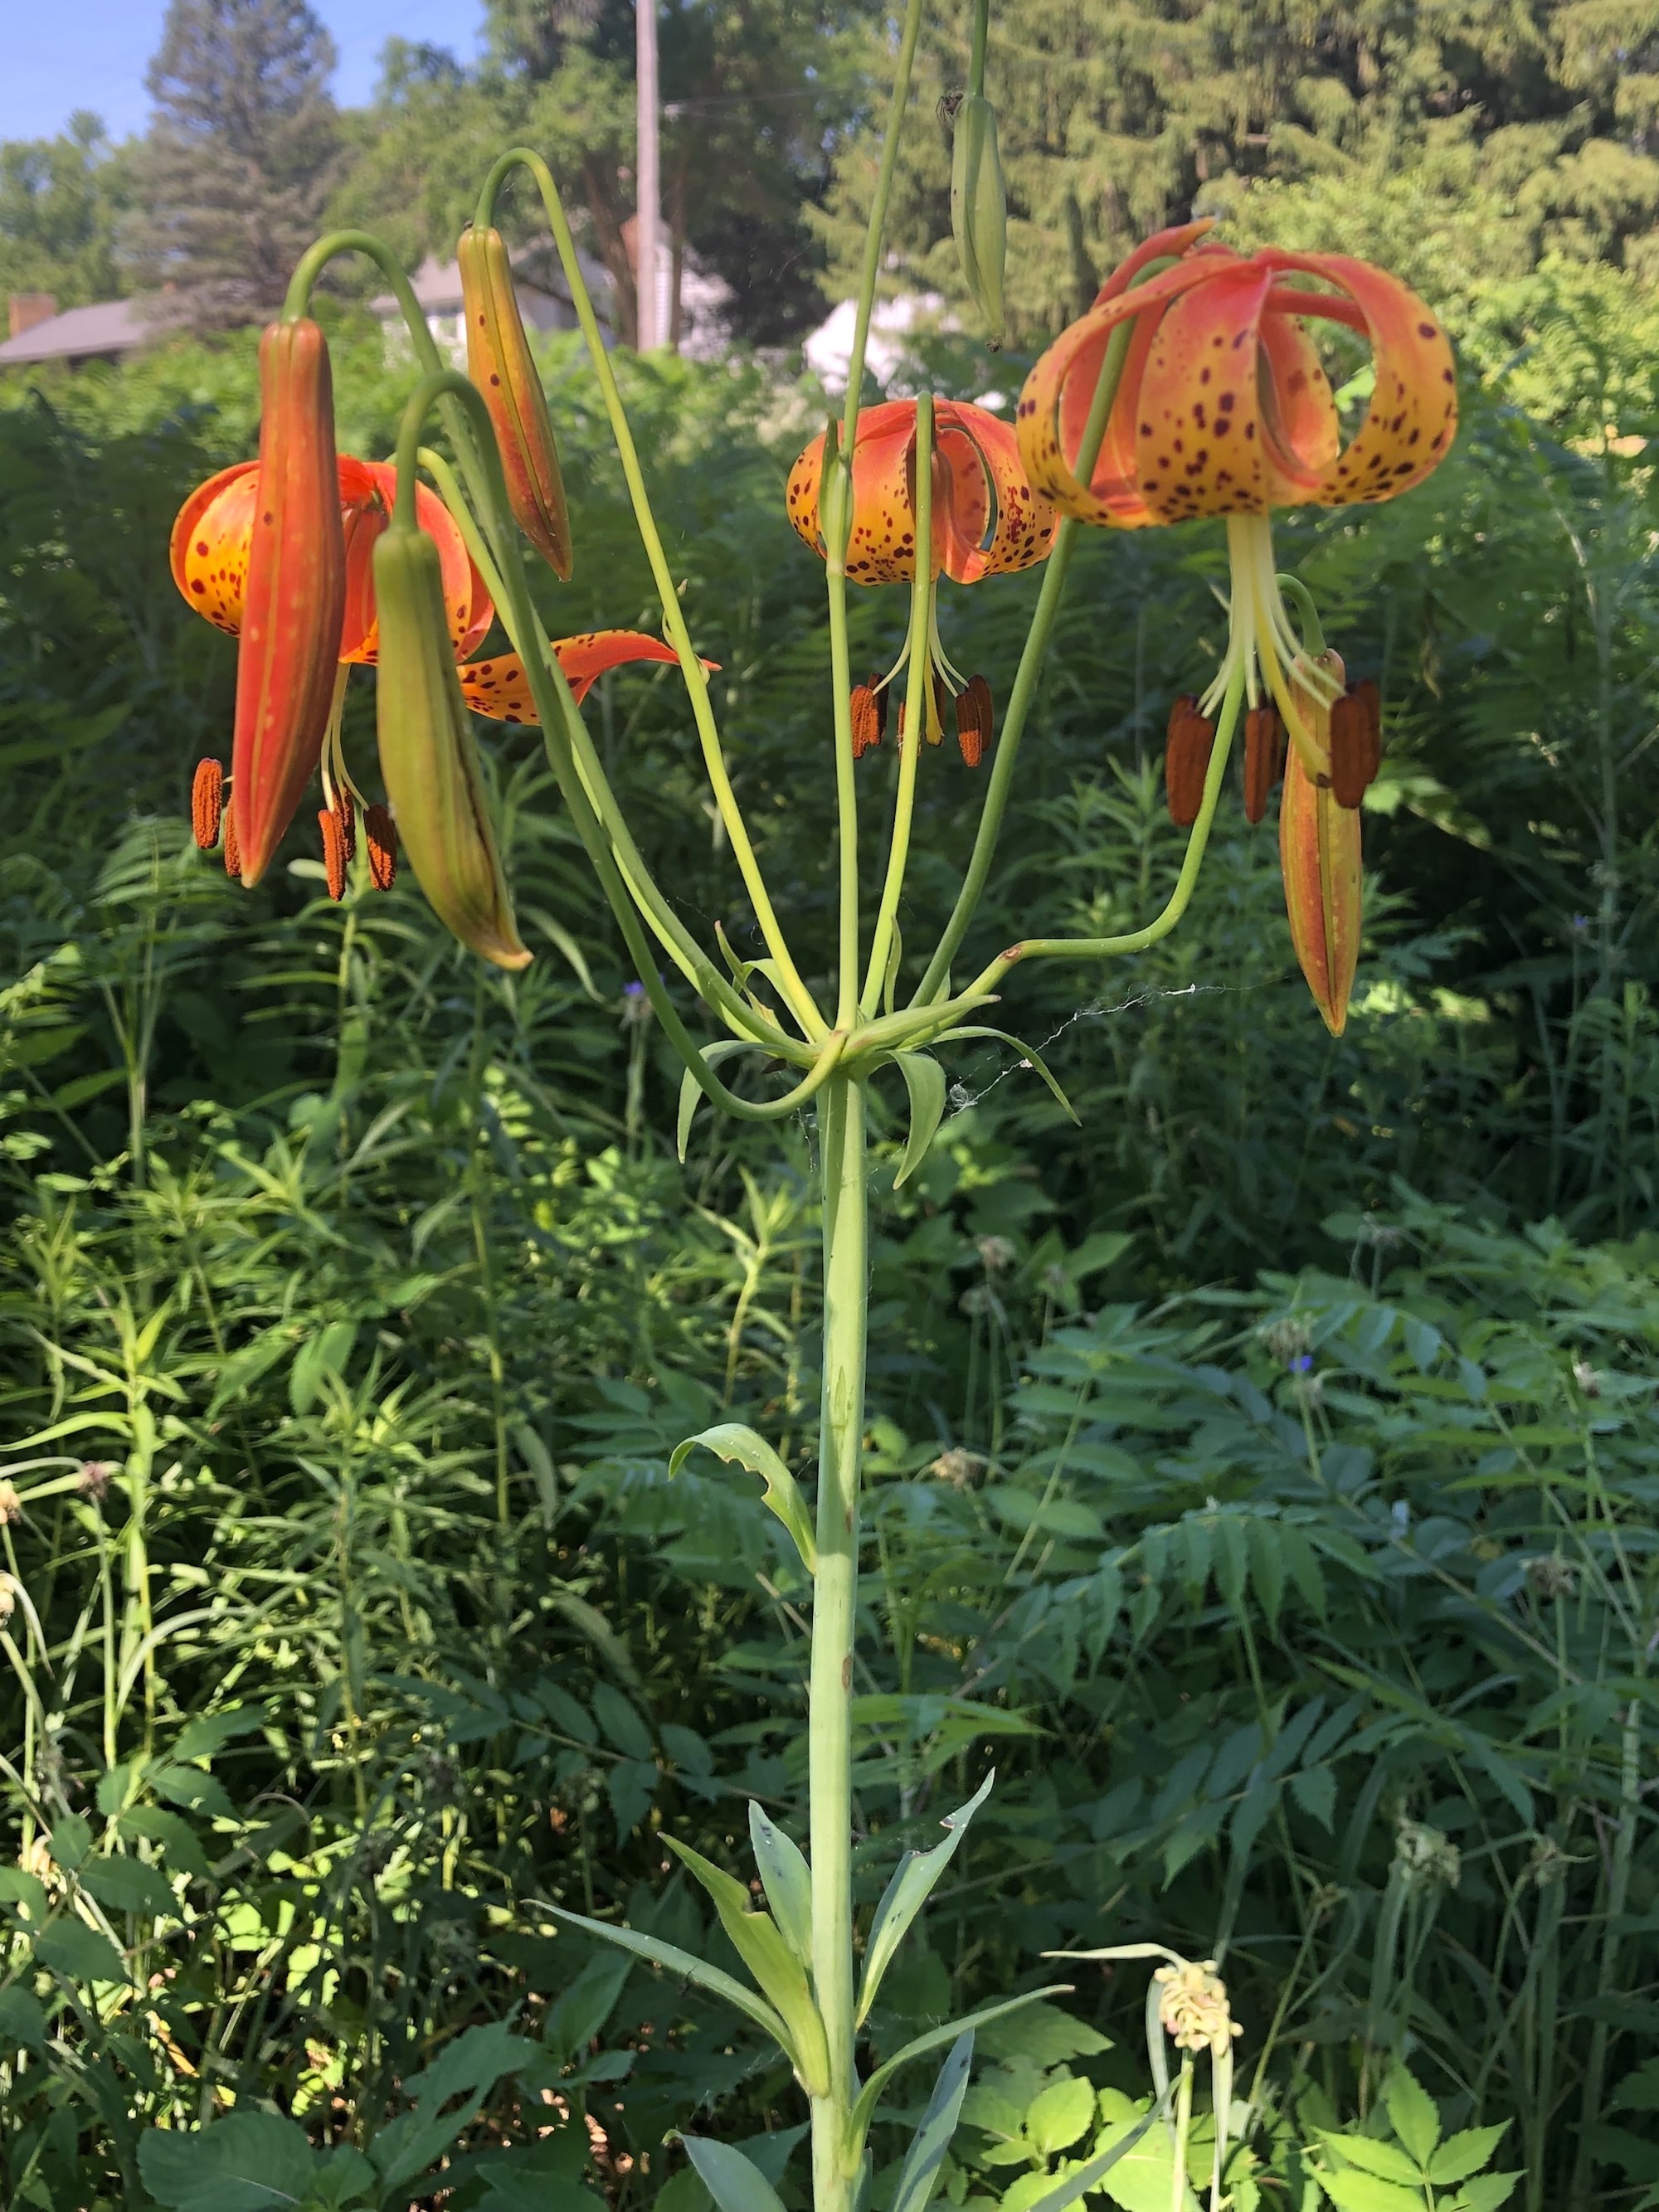 Michigan Lily in Oak Savanna in Madison, Wisconsin on July 4, 2020.